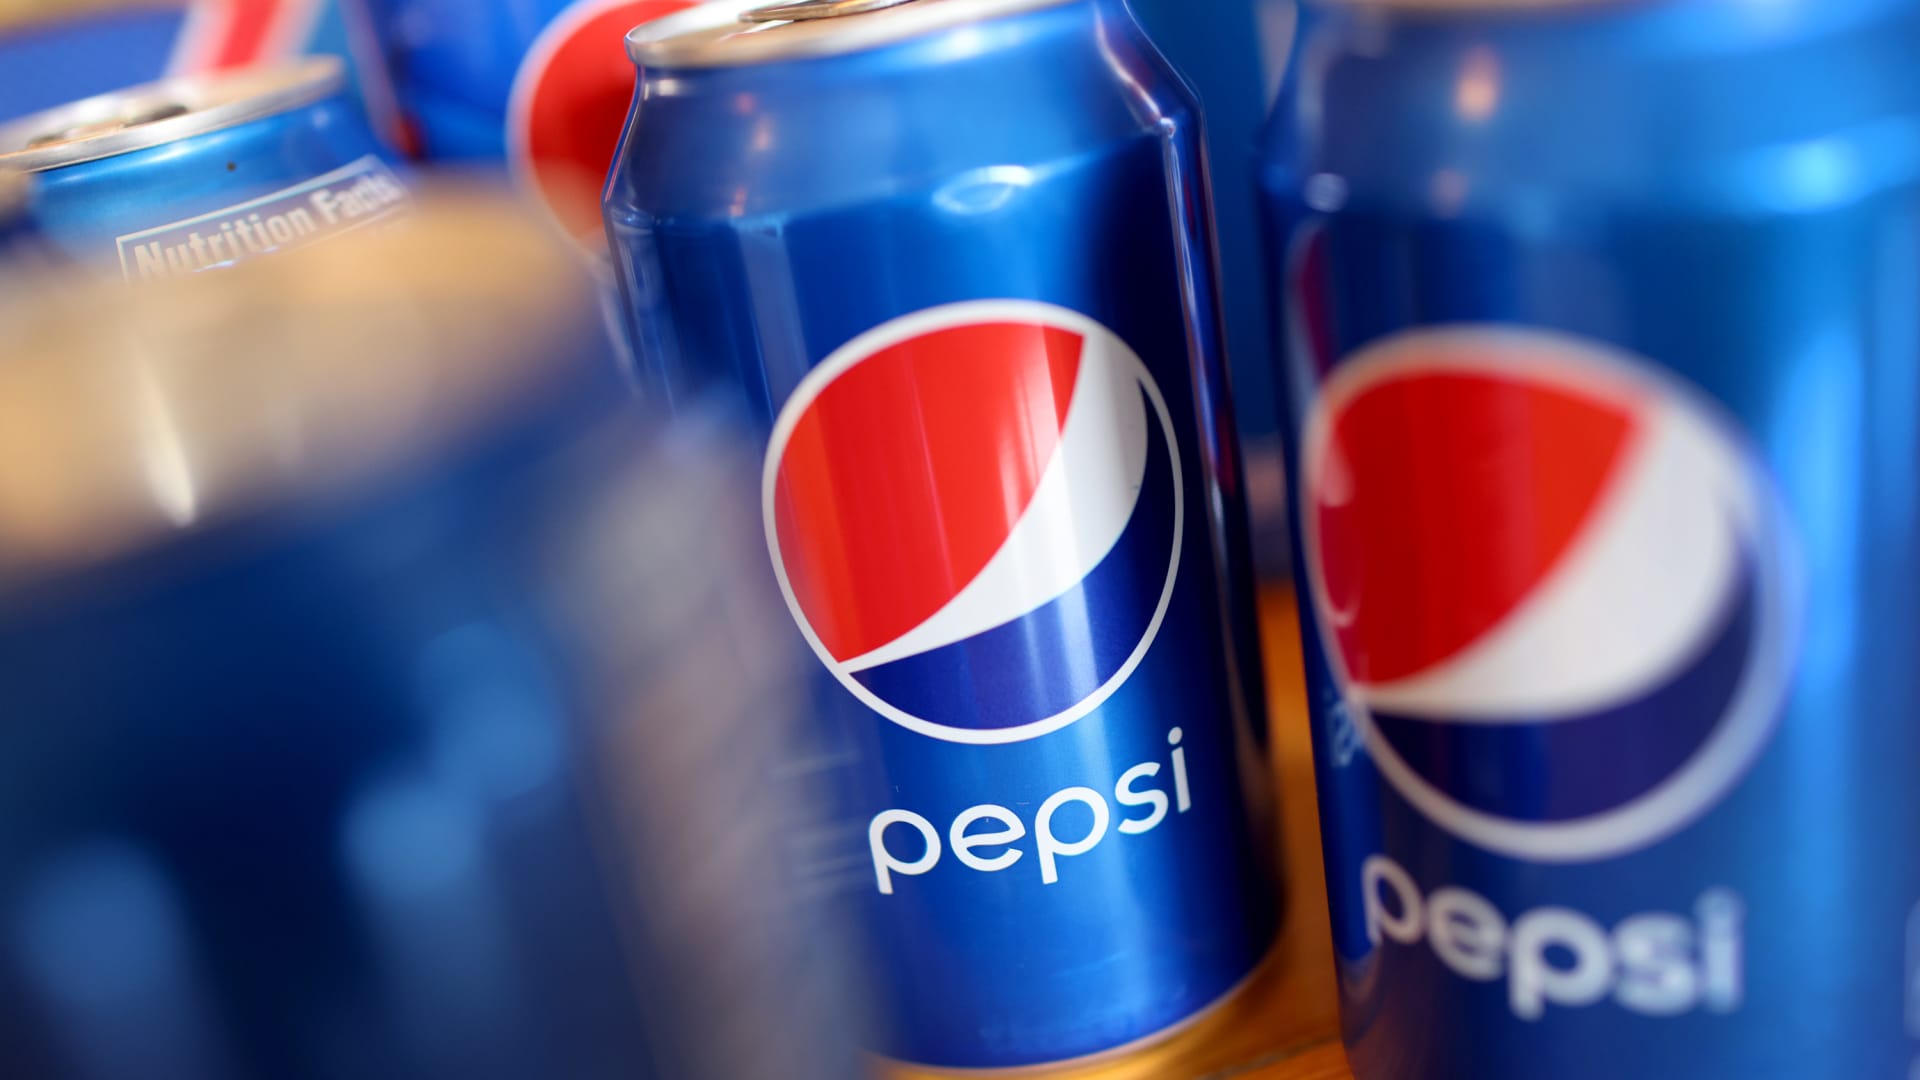 PepsiCo (PEP) Q1 2022 earnings beat estimates